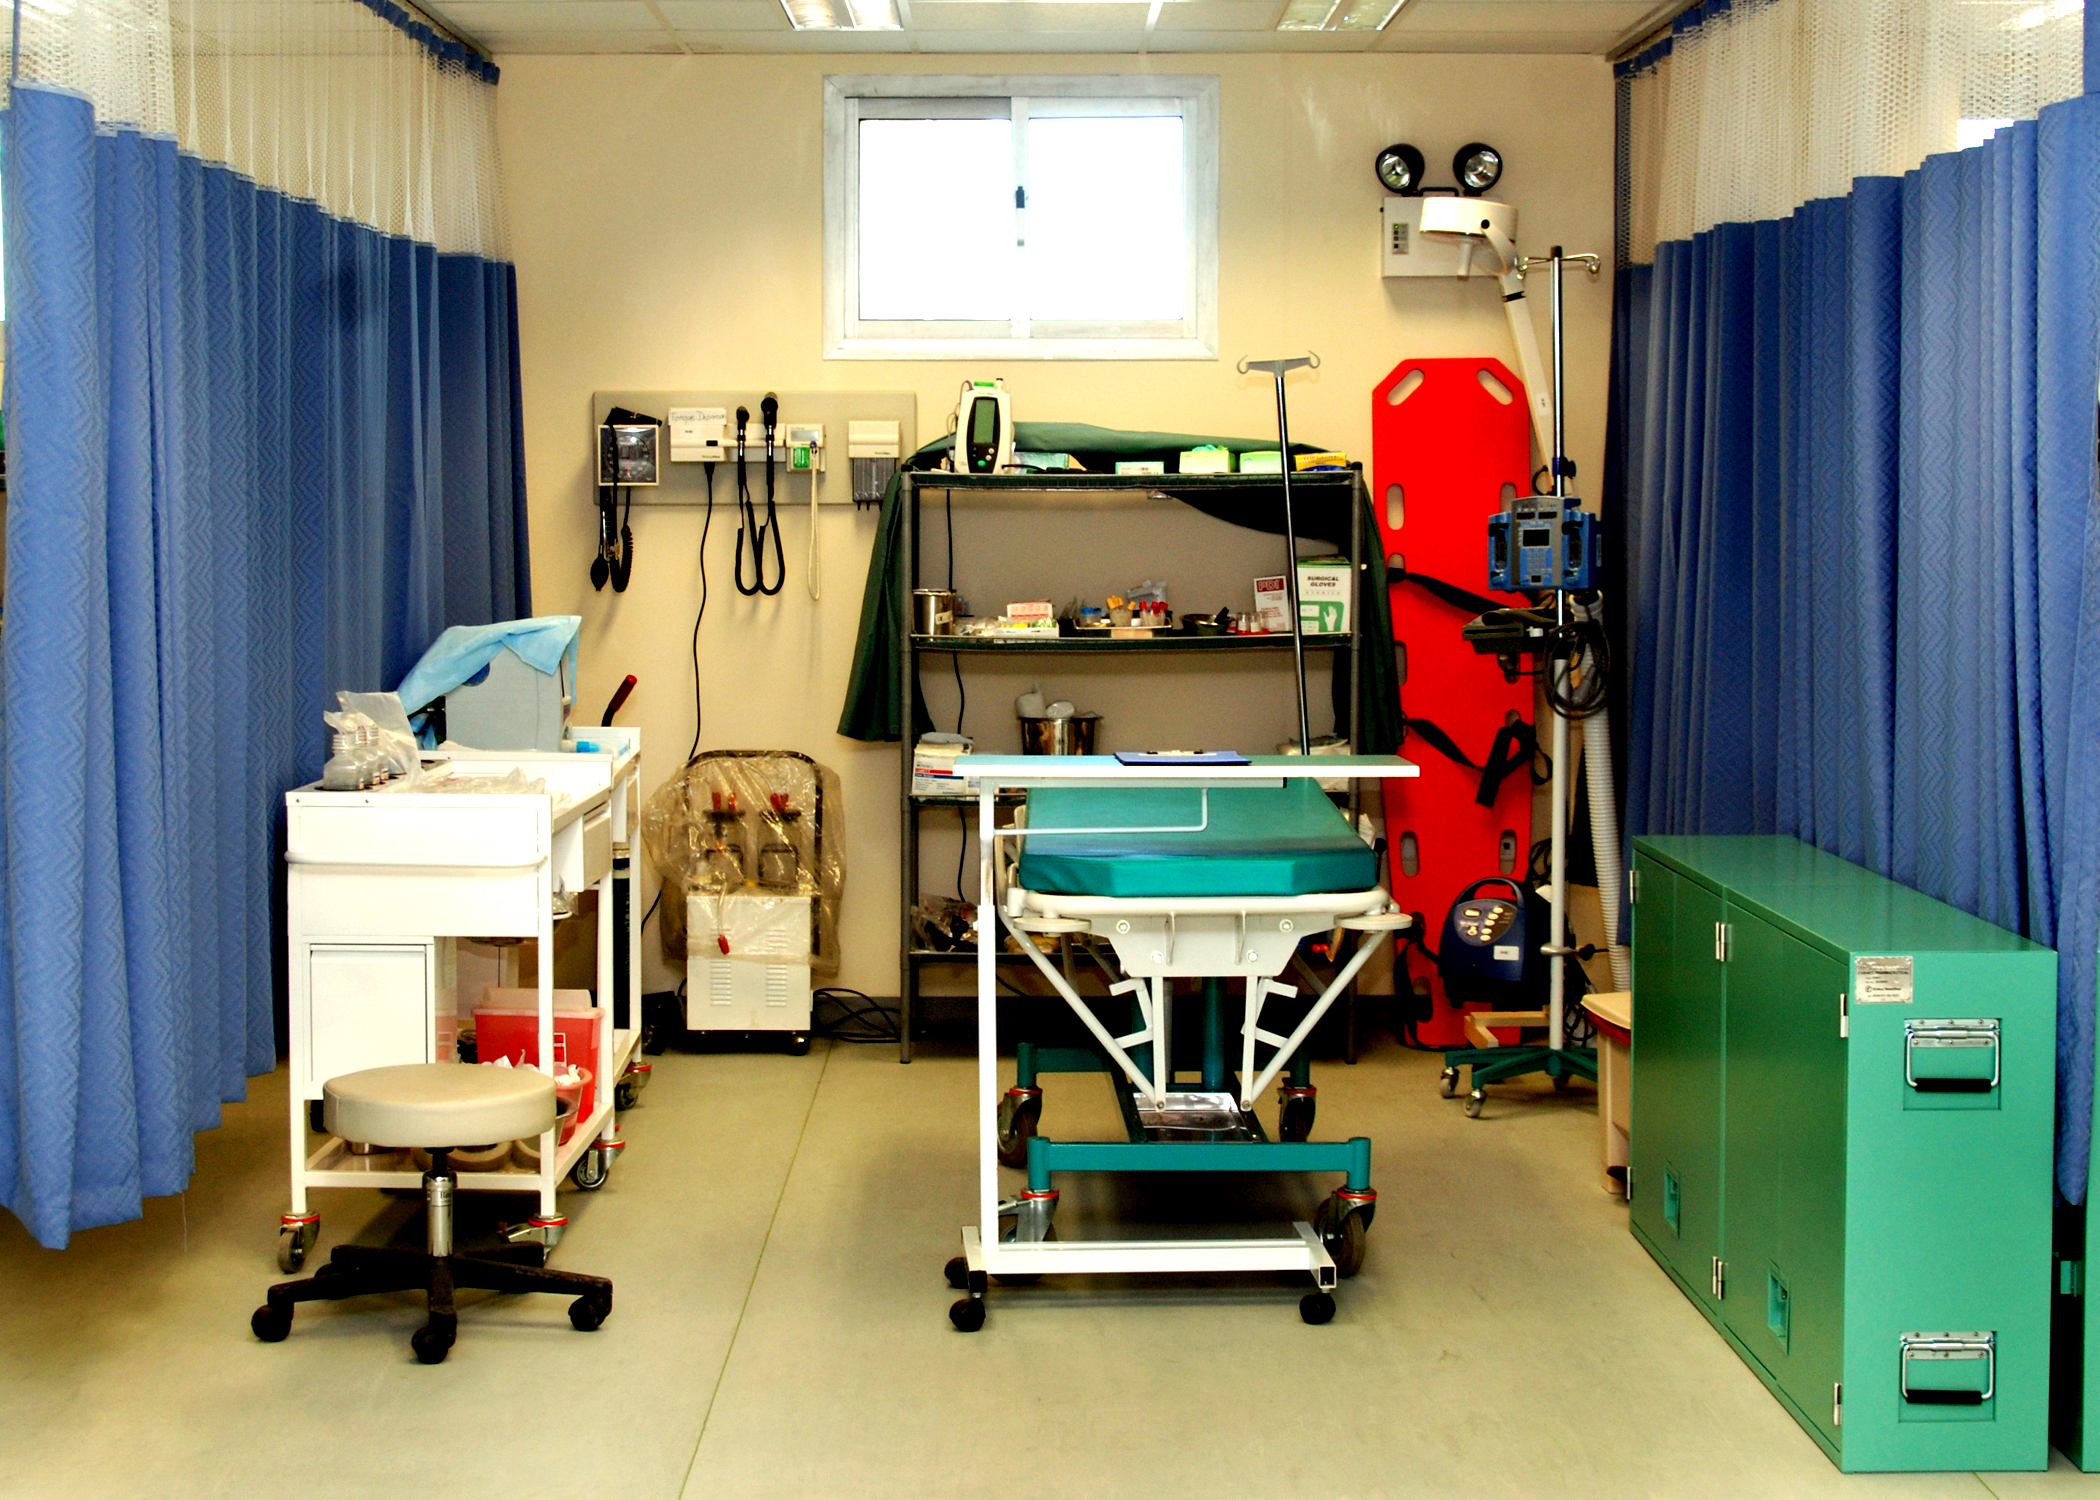 Treatment area inside the ANA regional hospital in Kandahar